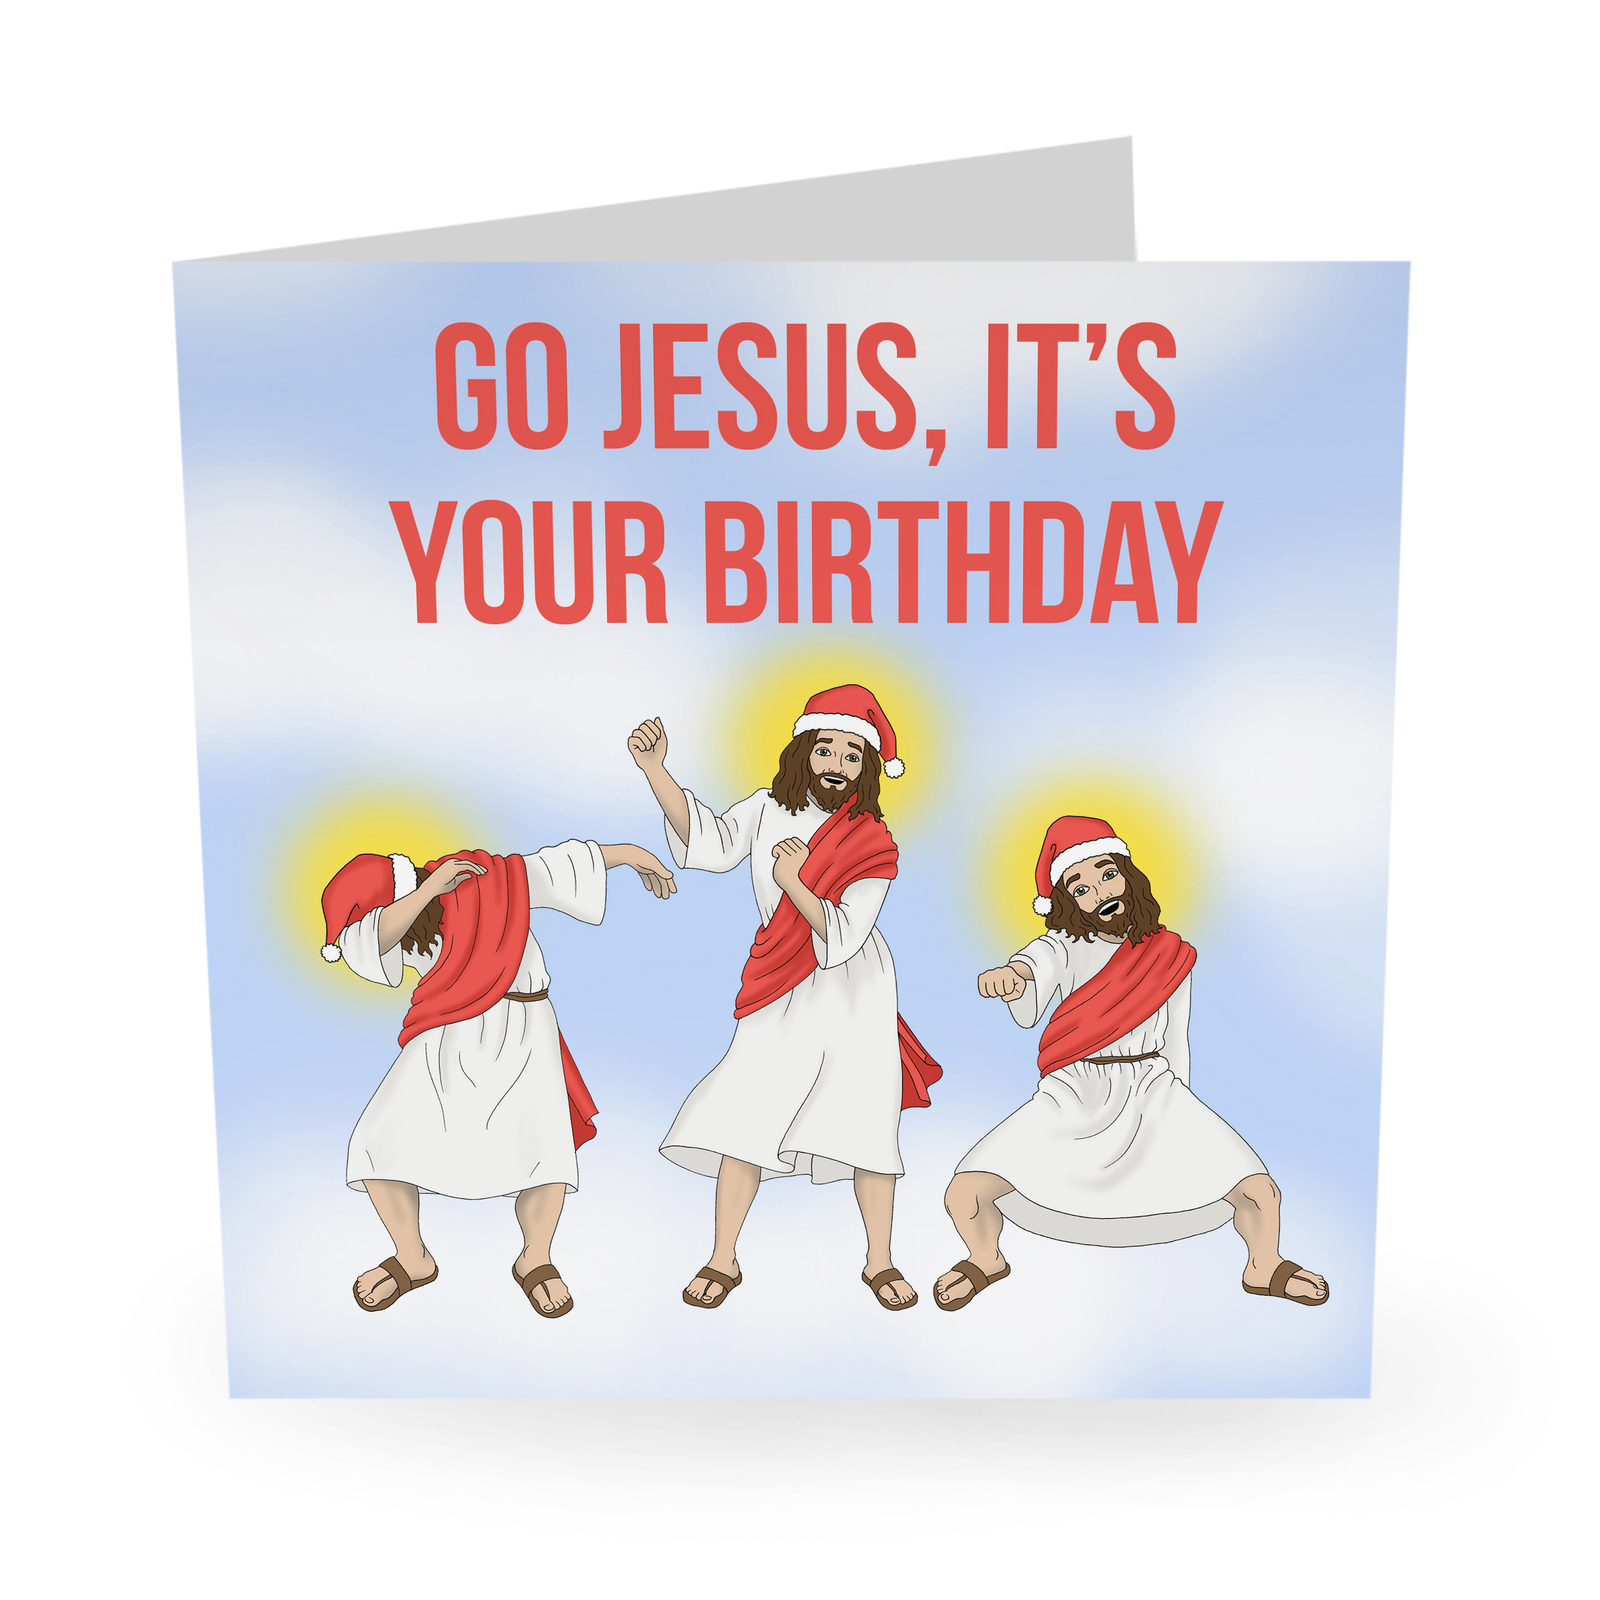 Go Jesus It's Your Birthday - Central23